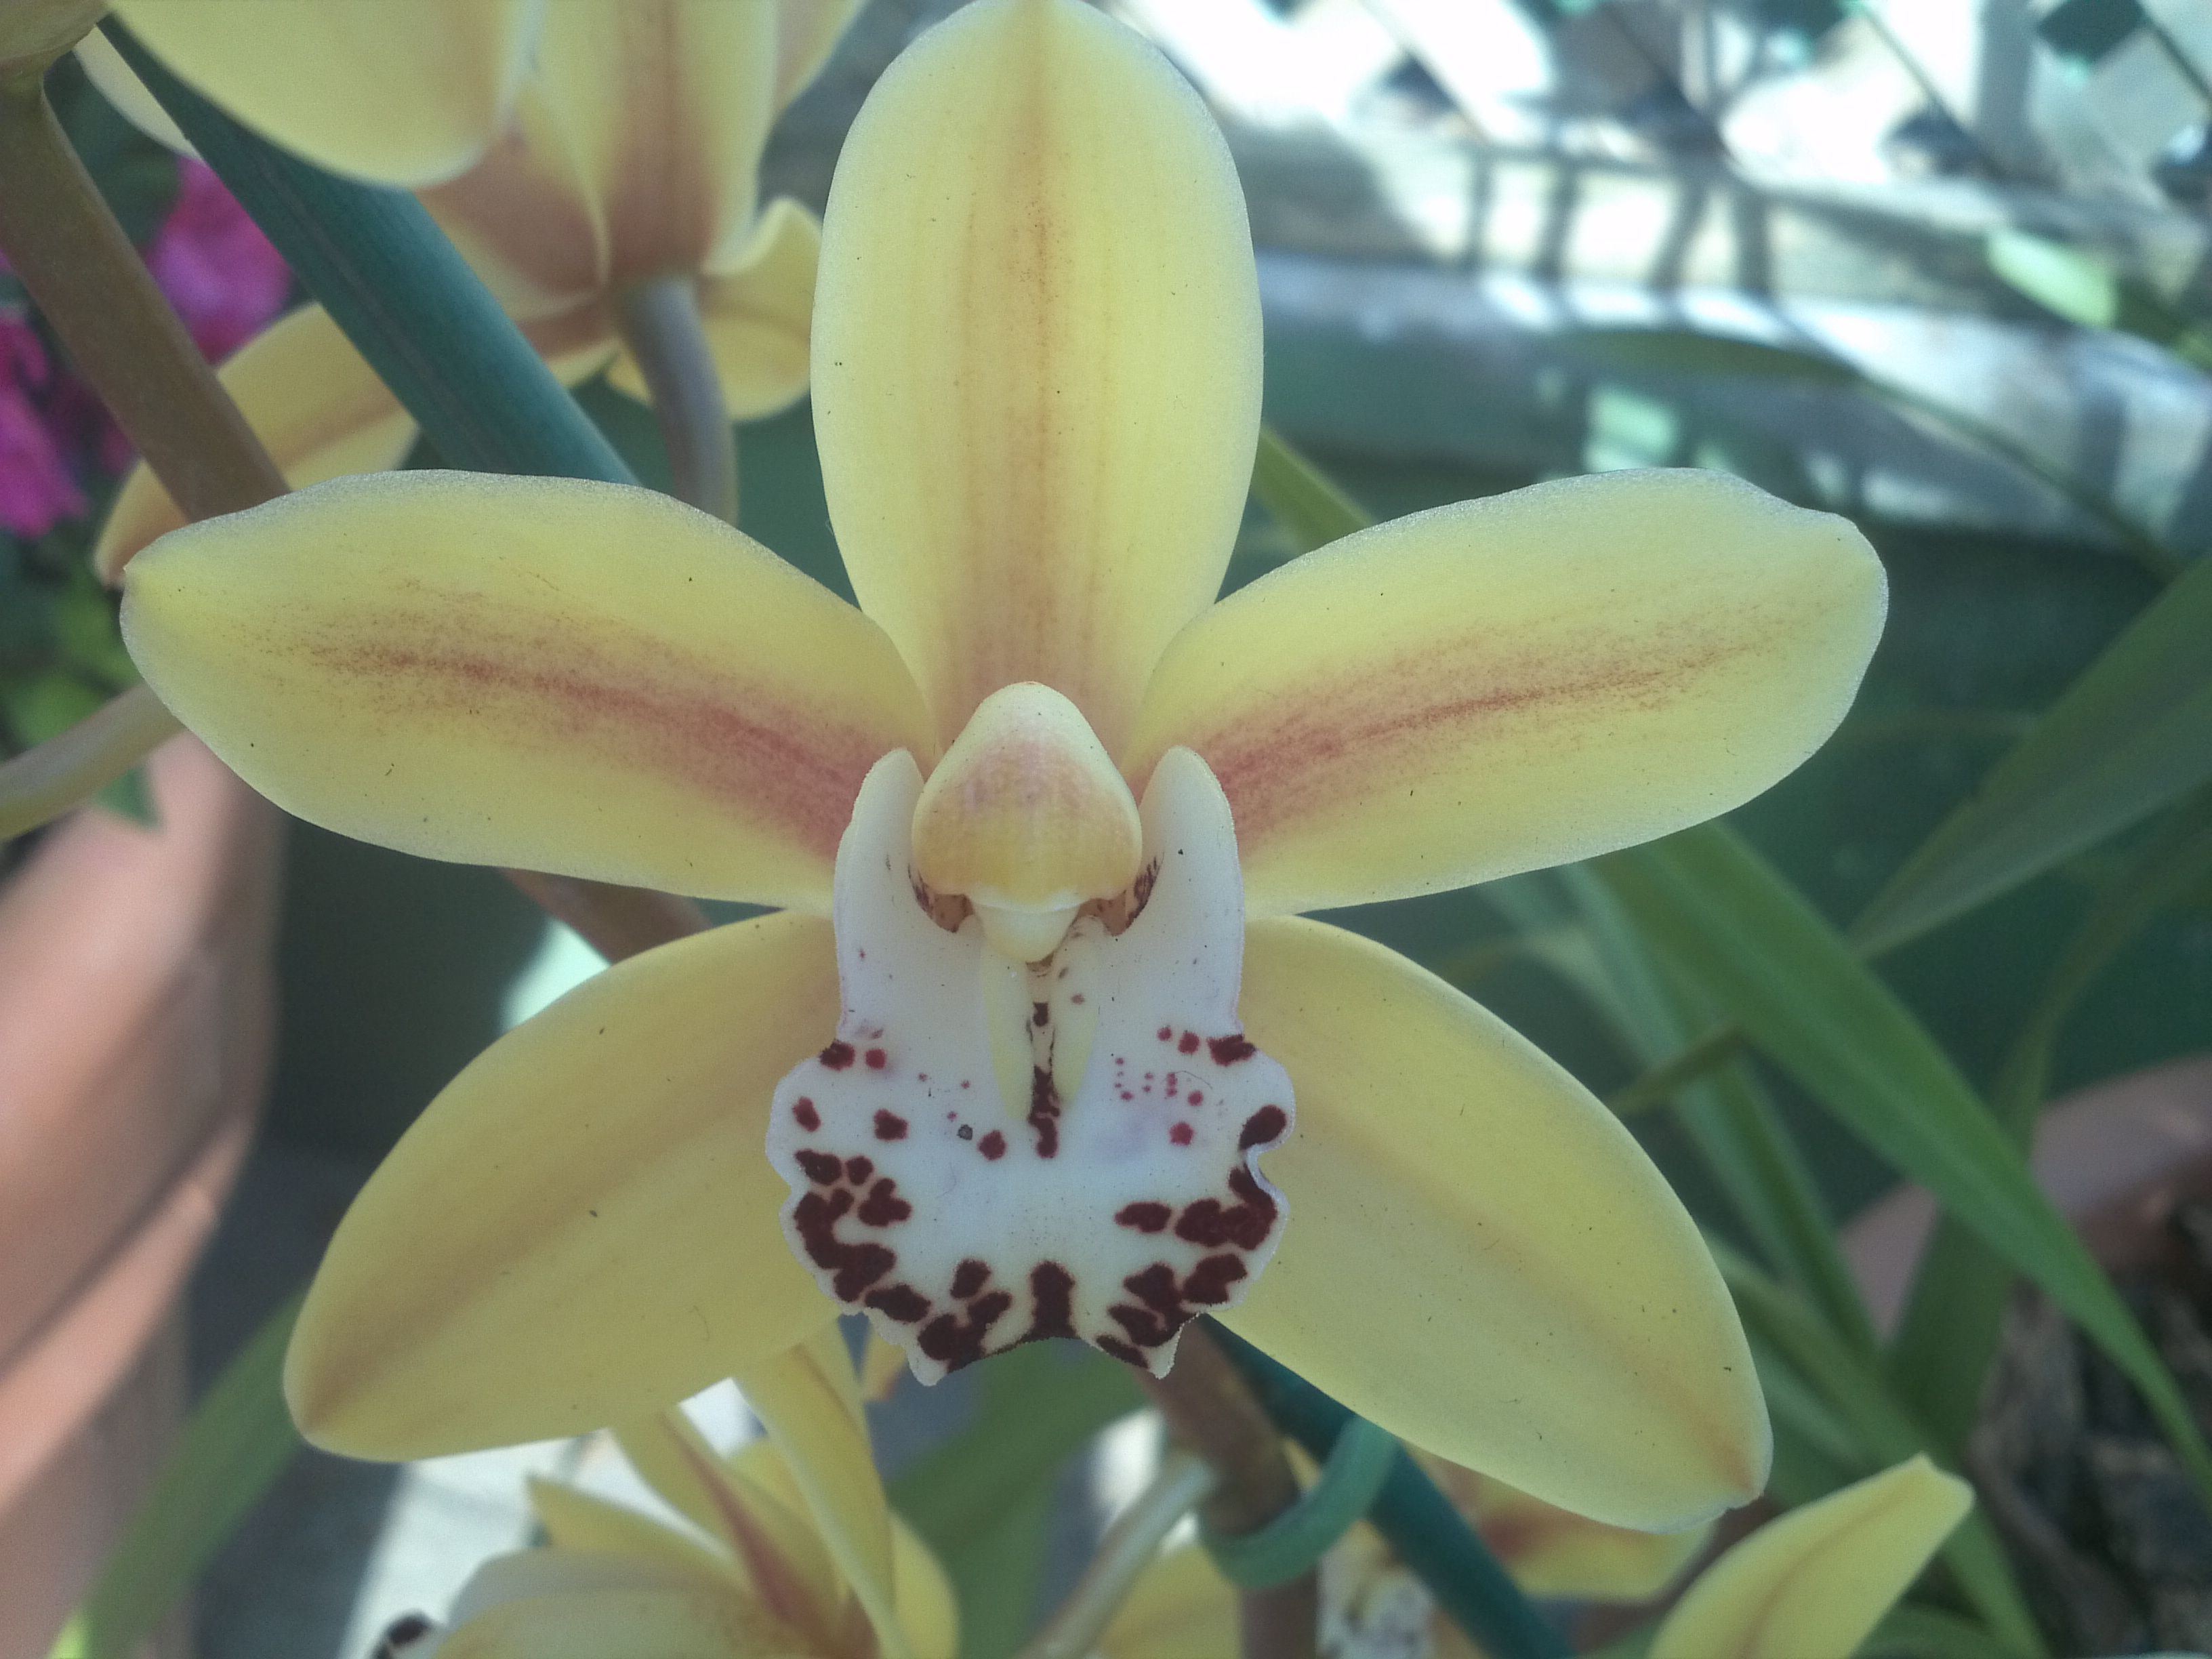 Get mature orchids